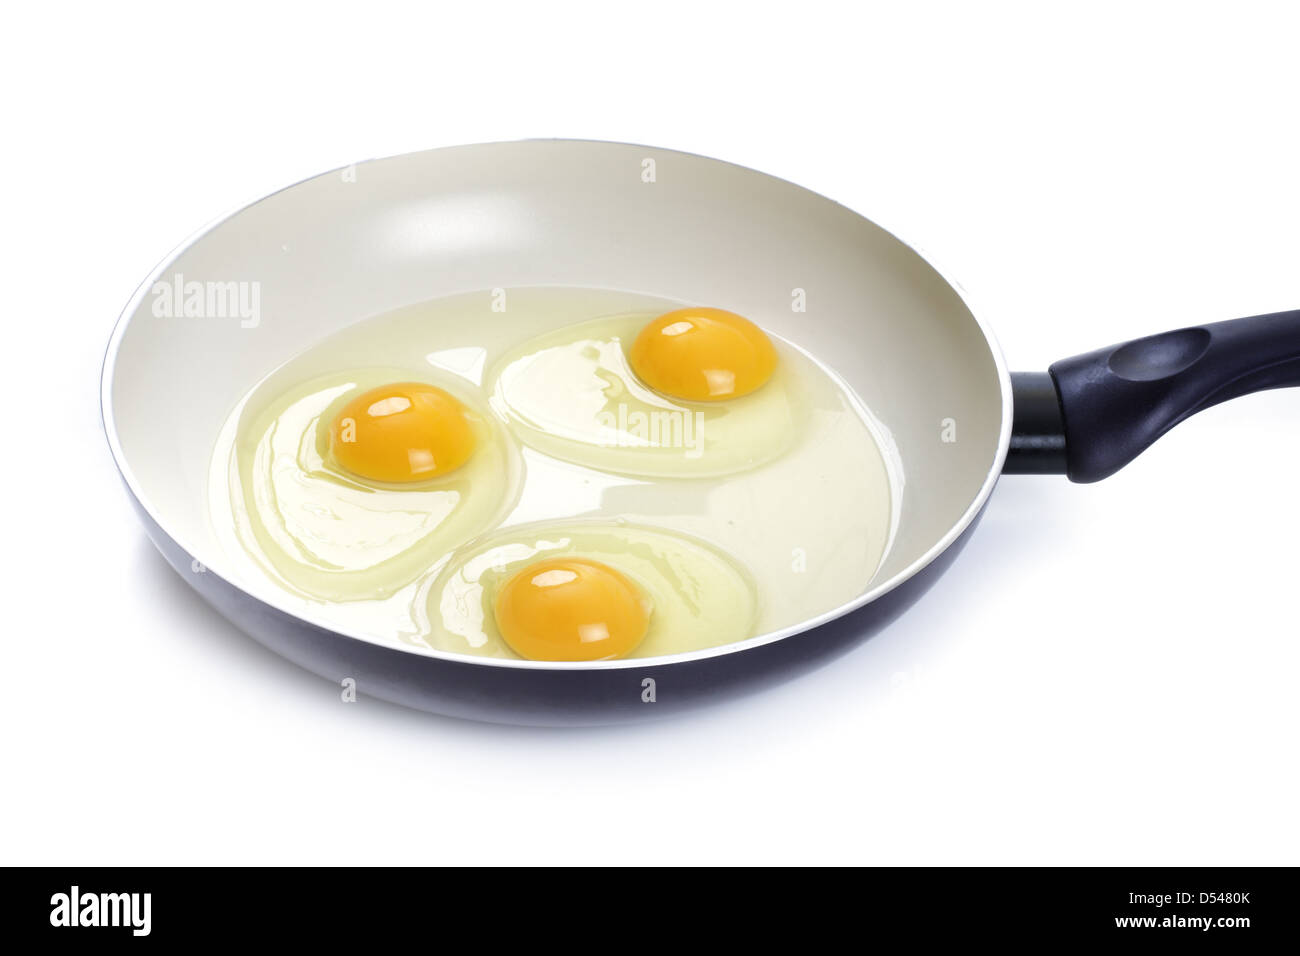 https://c8.alamy.com/comp/D5480K/three-eggs-in-a-frying-pan-white-background-D5480K.jpg